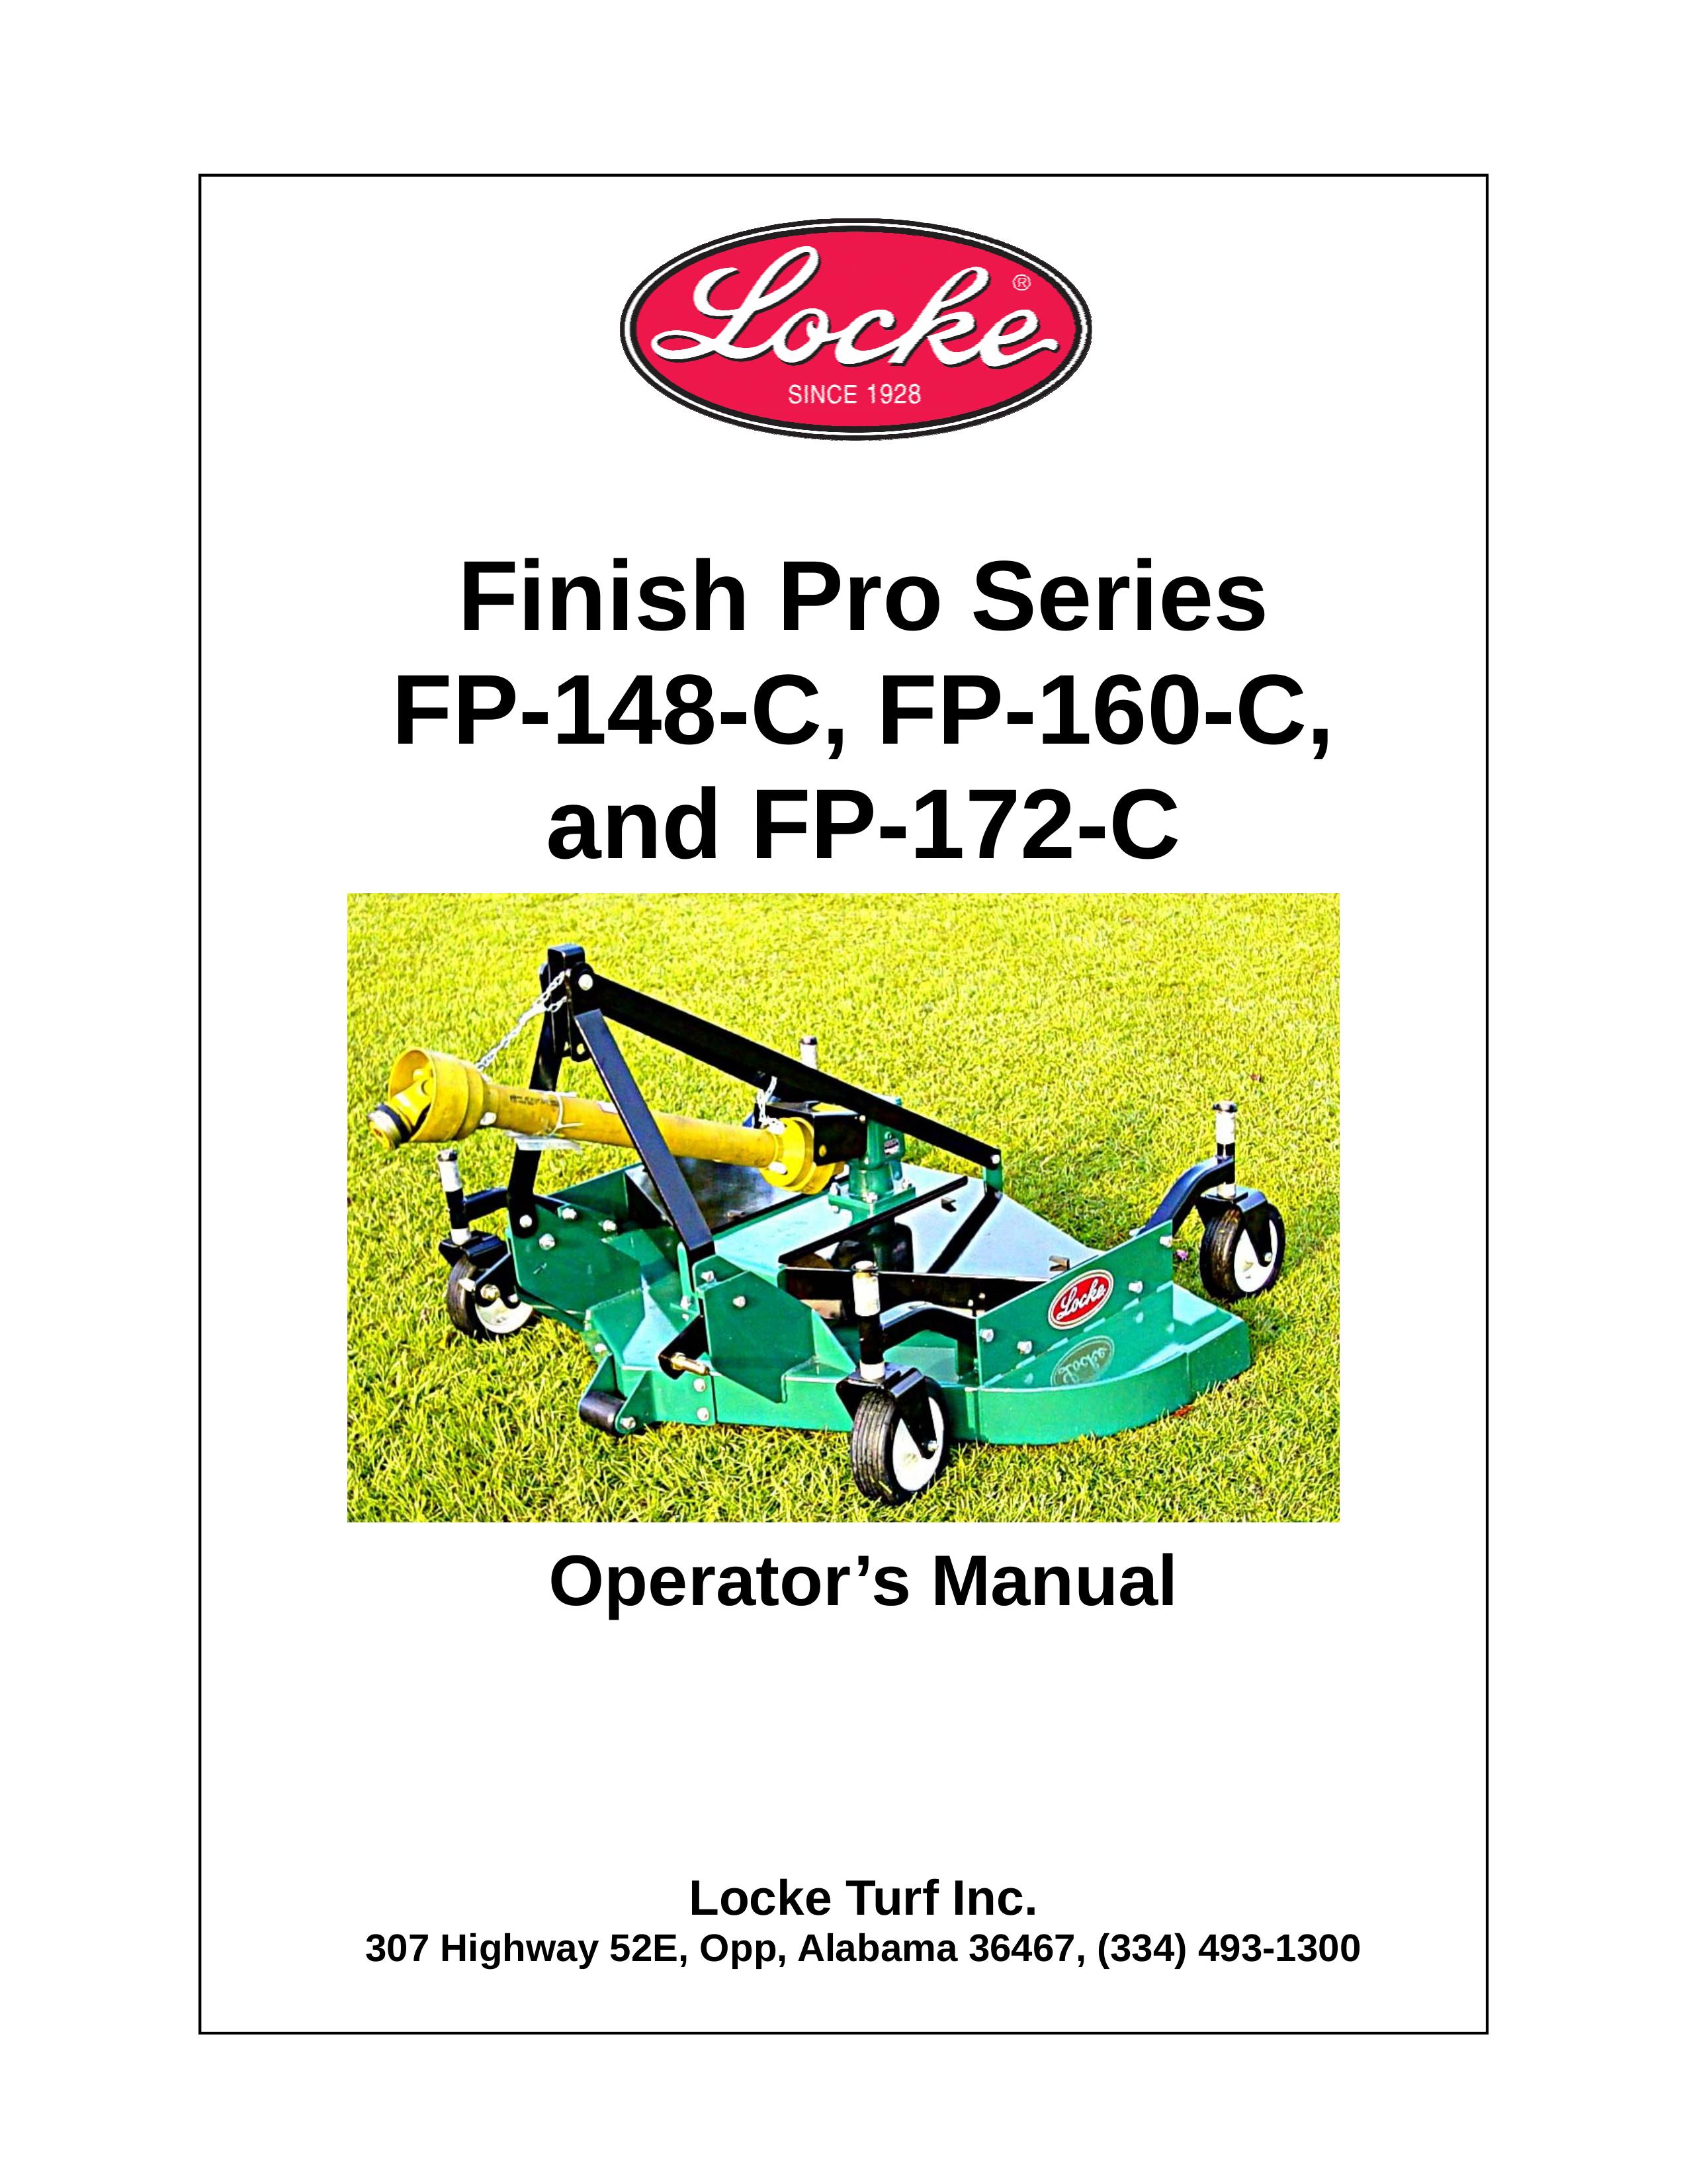 Locke FP-148-C Lawn Mower User Manual